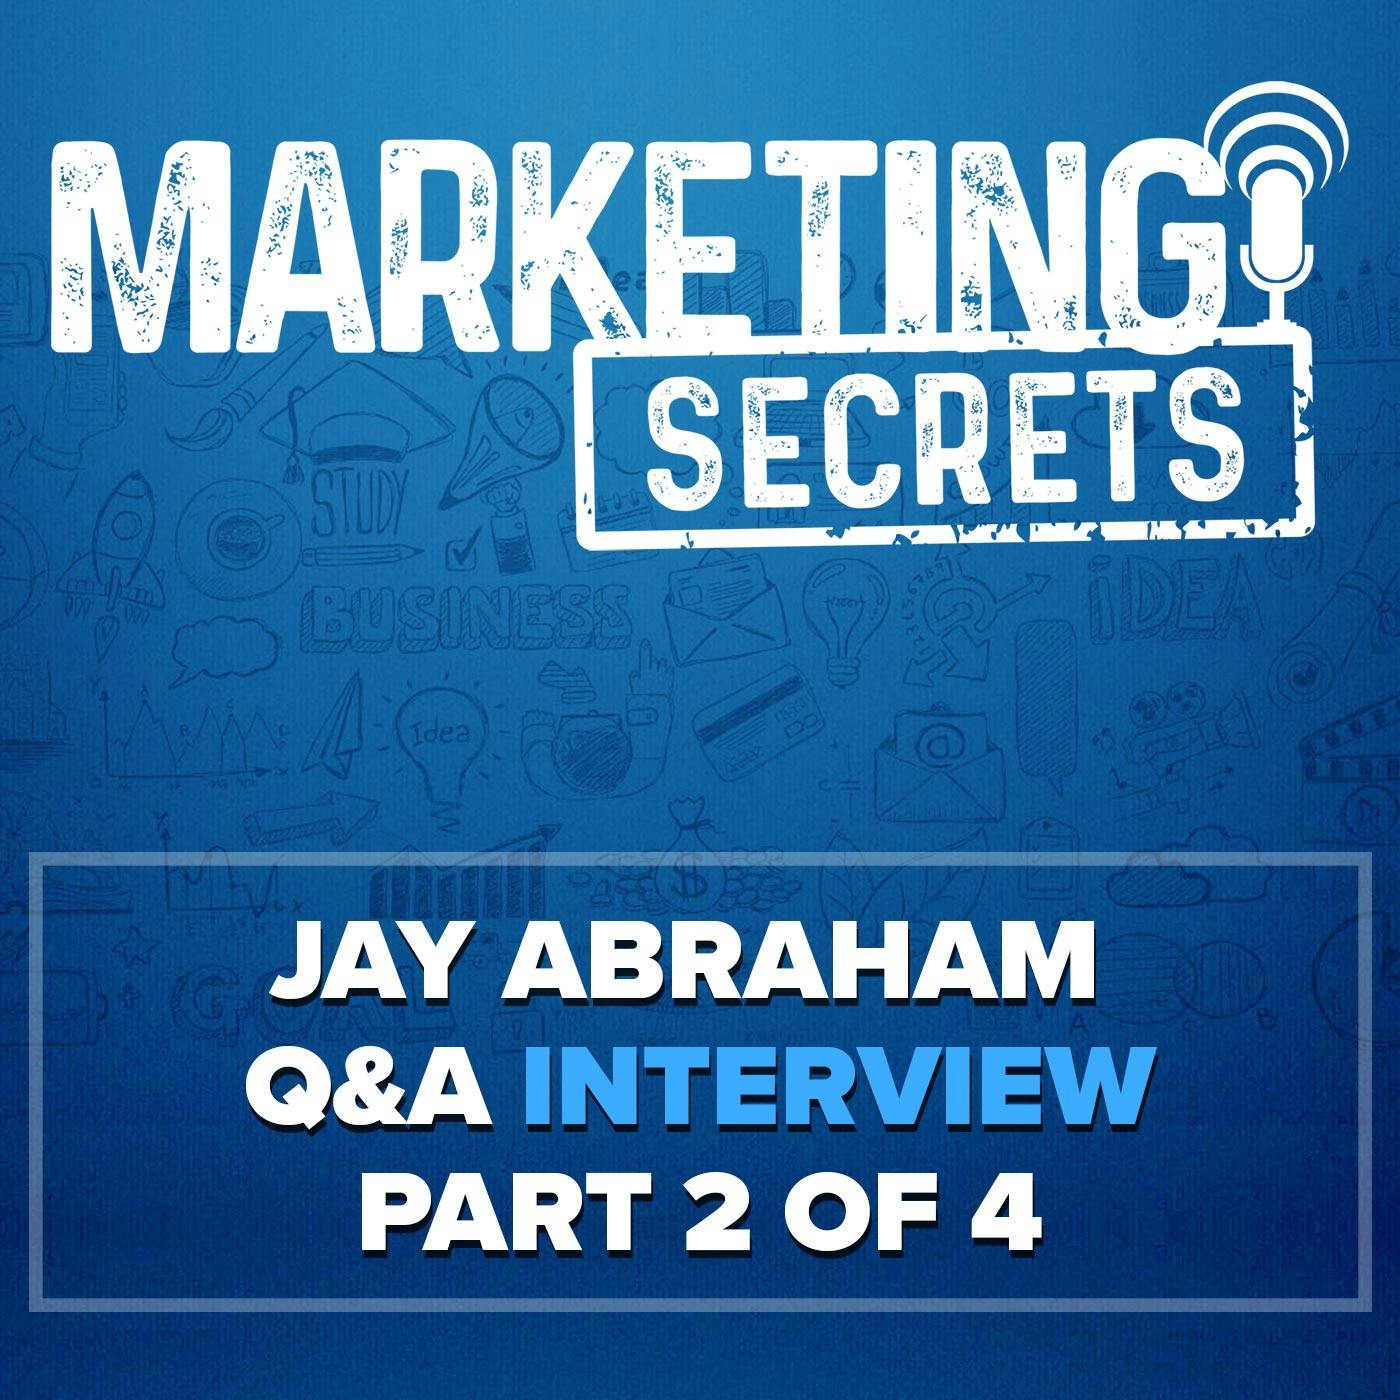 Jay Abraham Q&A Interview - Part 2 of 4